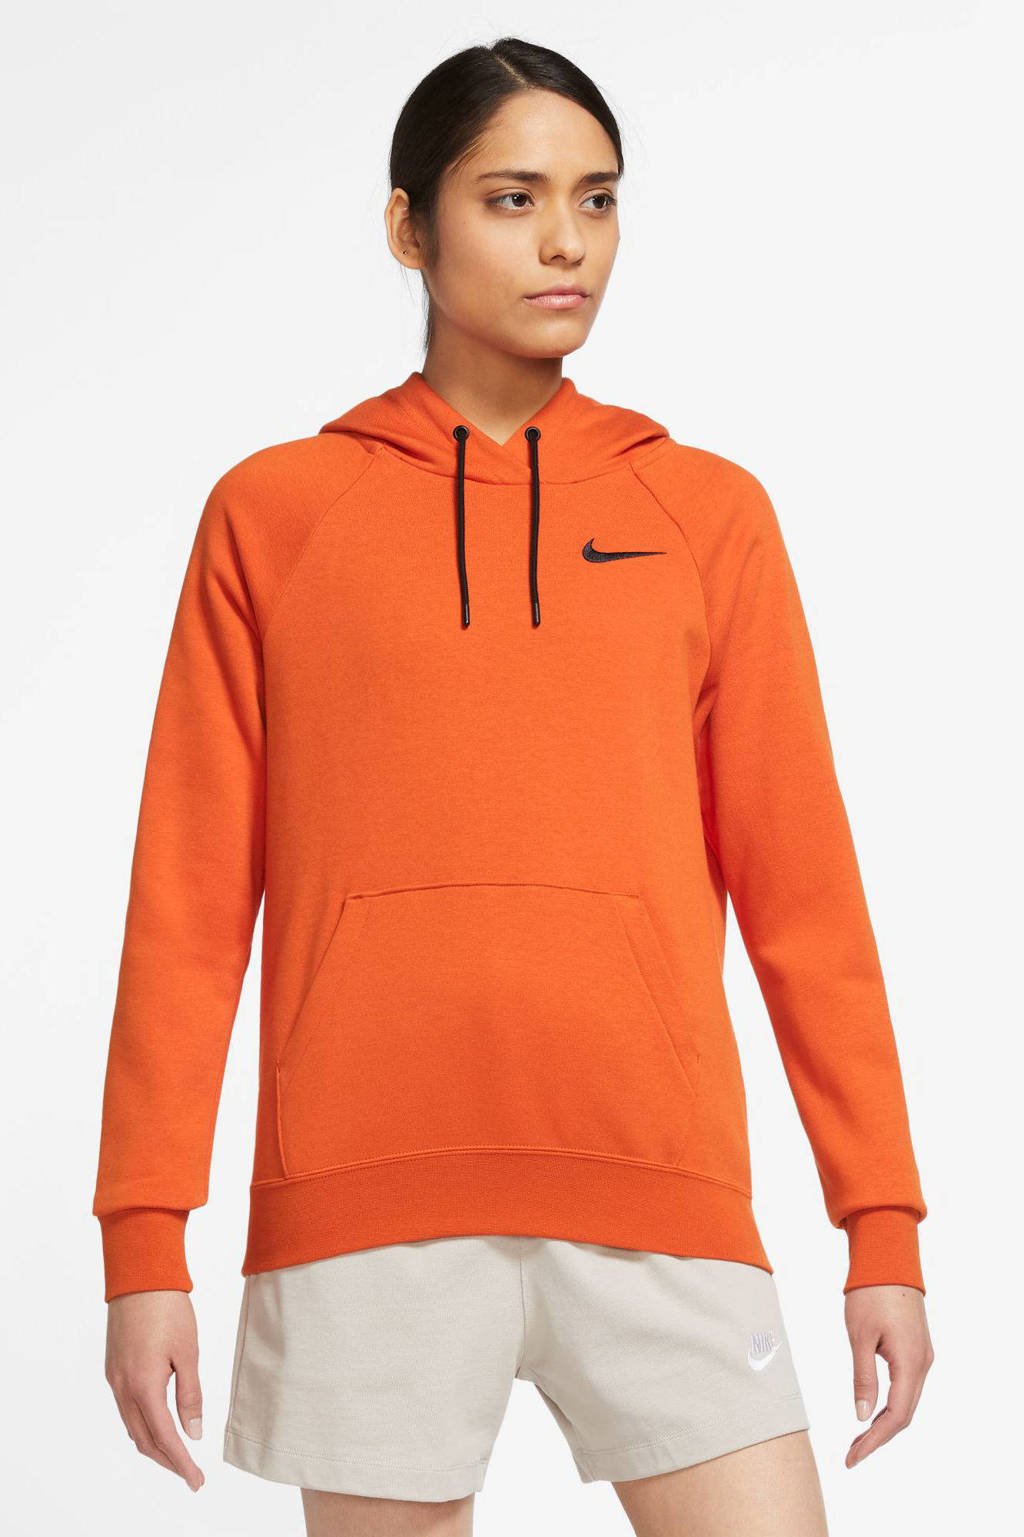 Schilderen Menselijk ras Janice Nike Nederland KNVB hoodie oranje | wehkamp